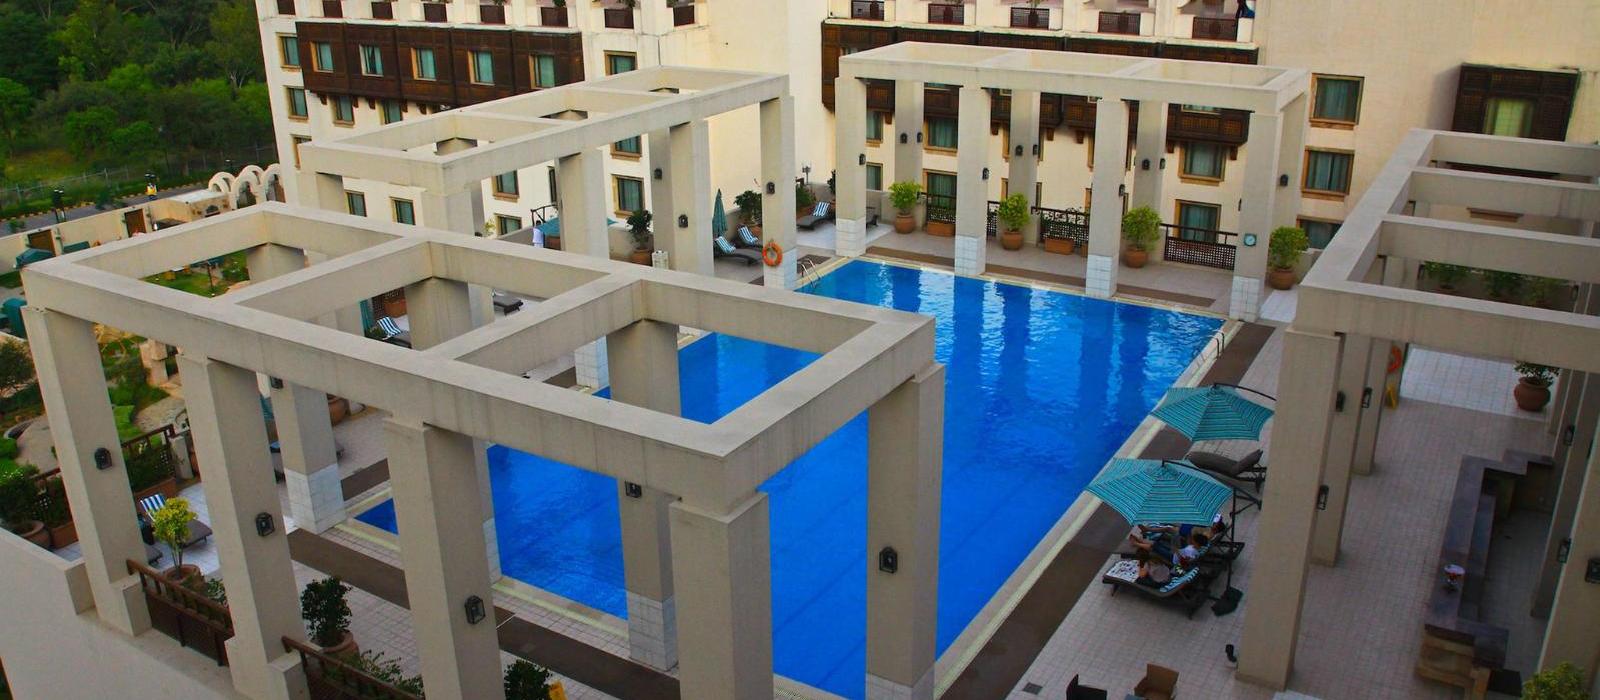 伊斯兰堡塞雷娜大酒店(Islamabad Serena Hotel) 图片  www.lhw.cn